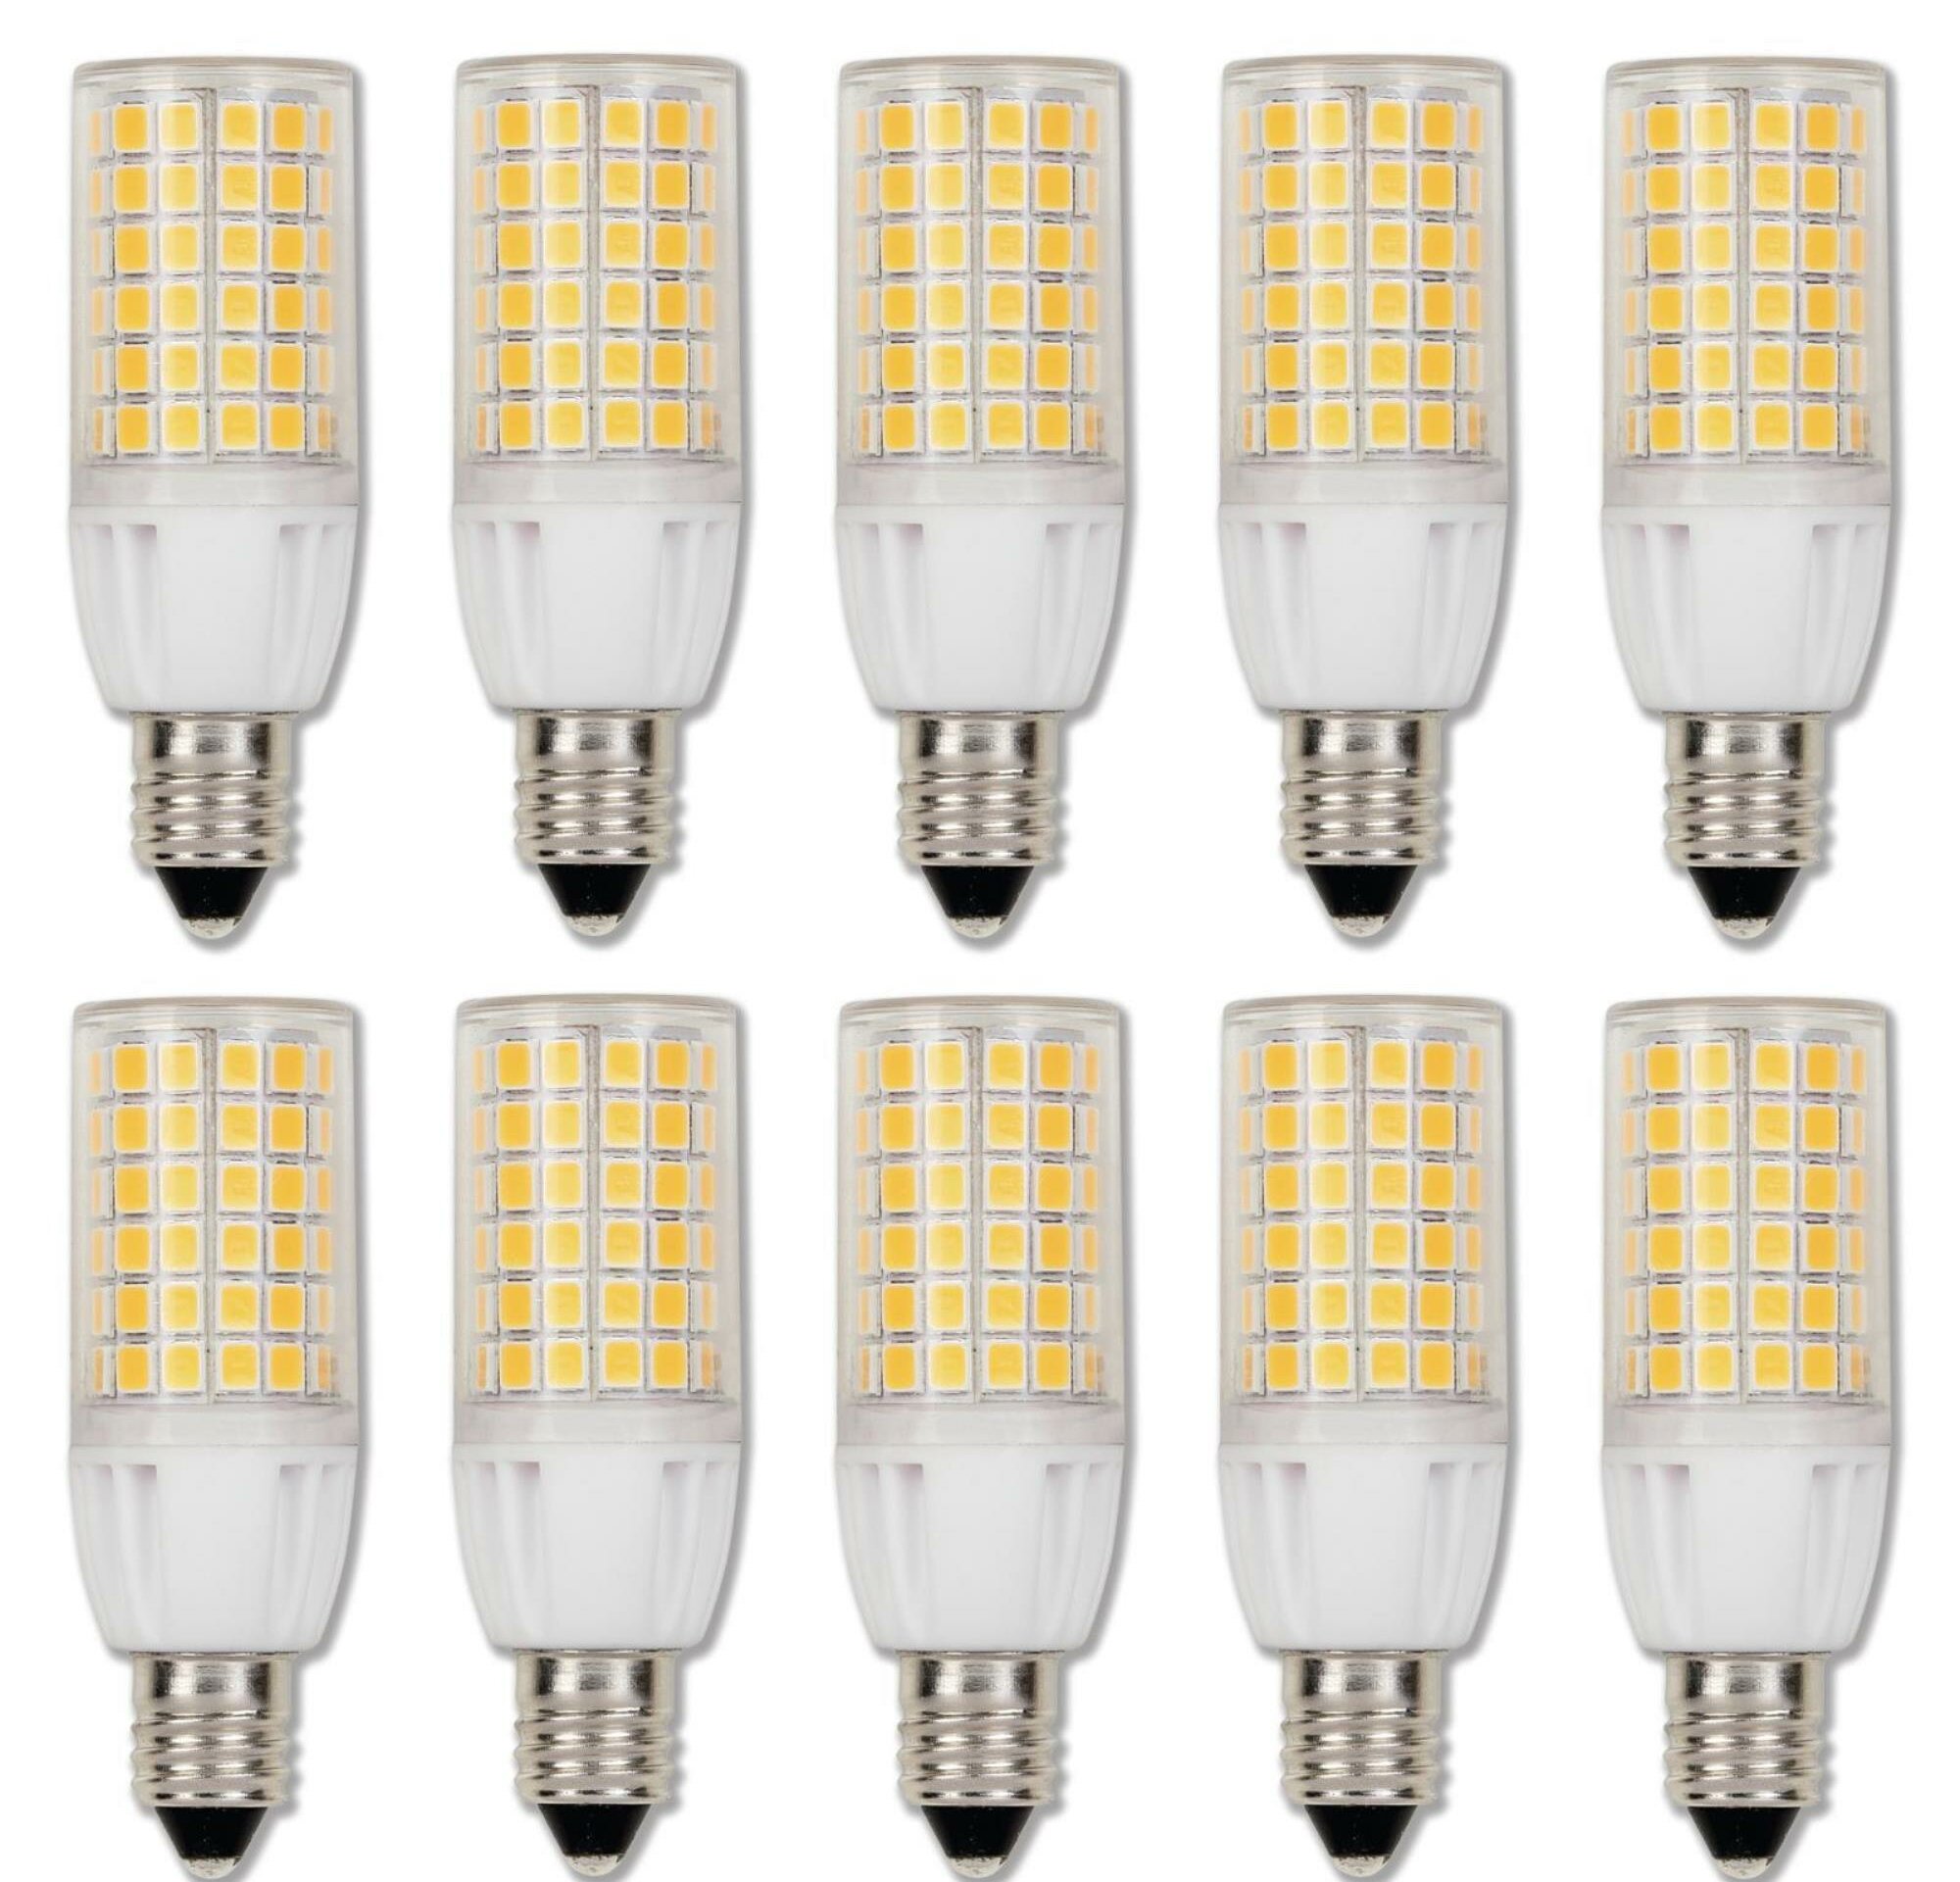 E11 Candelabra Base Led Bulb 102-2835SMD LED 9W 110V Ceramics Light White/Warm 